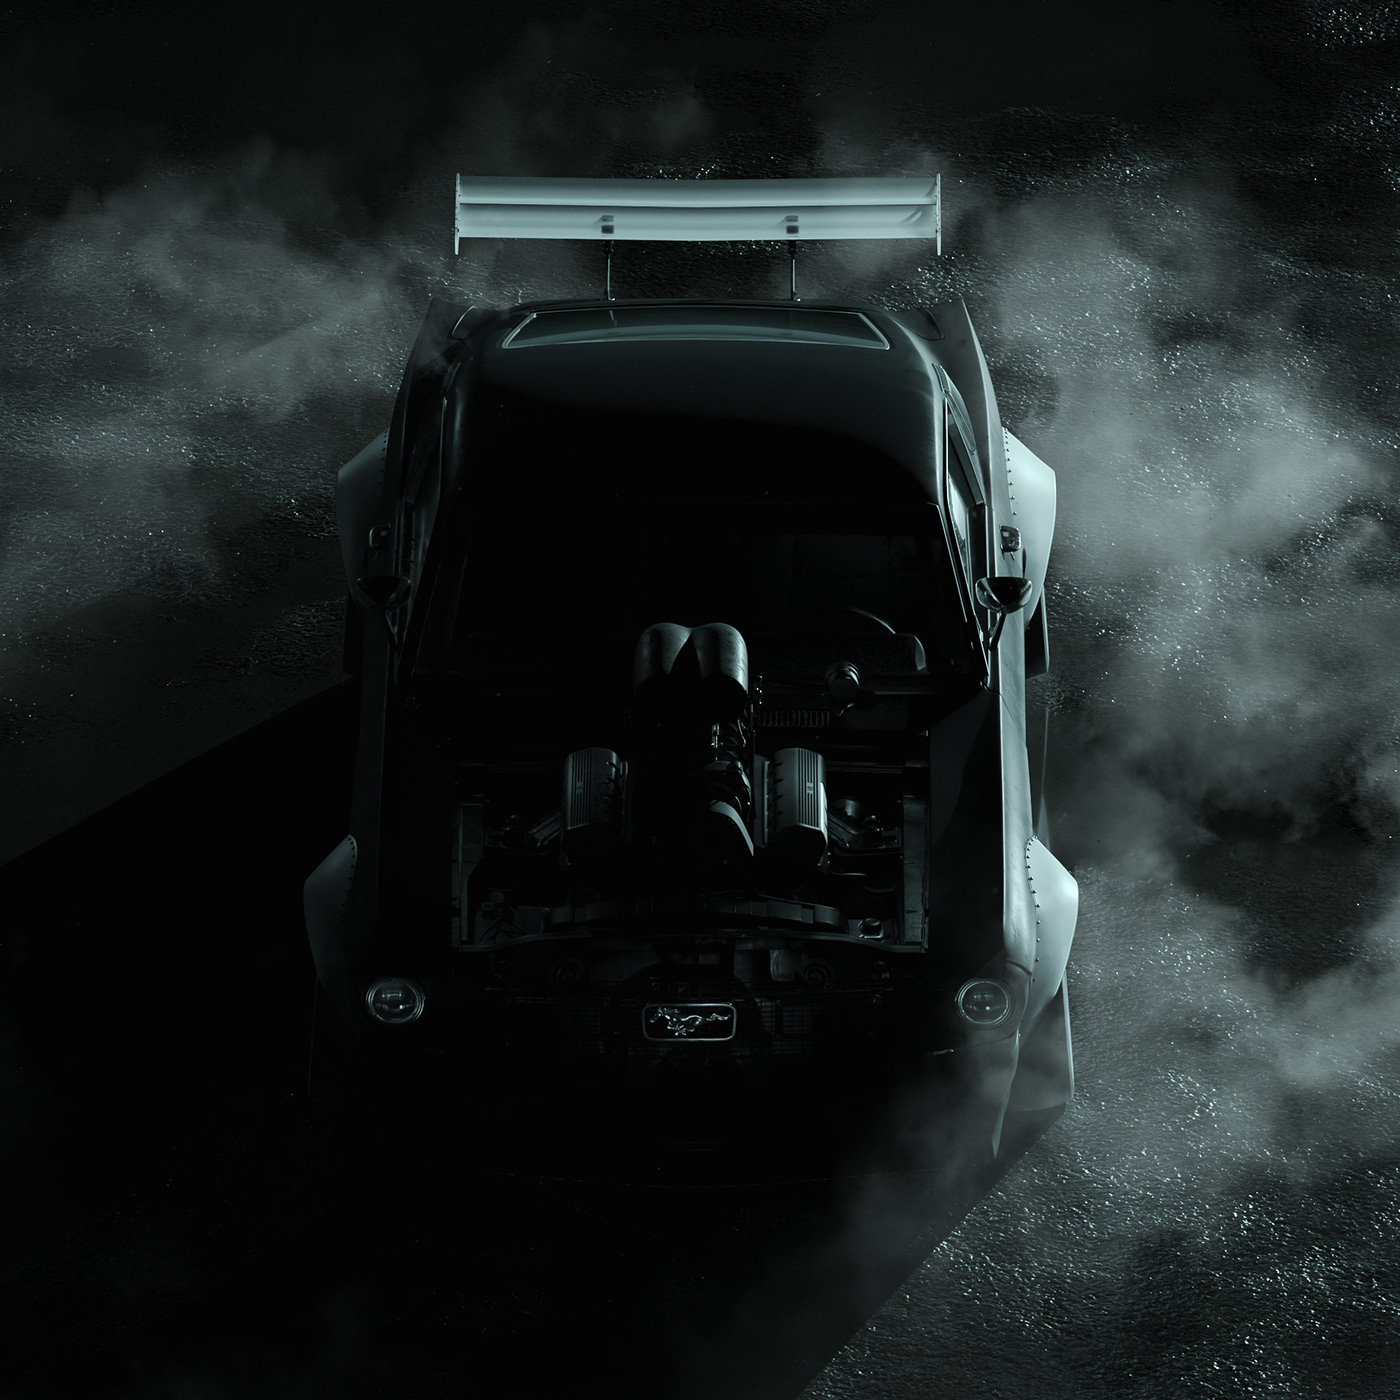 Mustang CG CGI car 3danimation octanerender   dragster 3dmodeling Racing CGCar